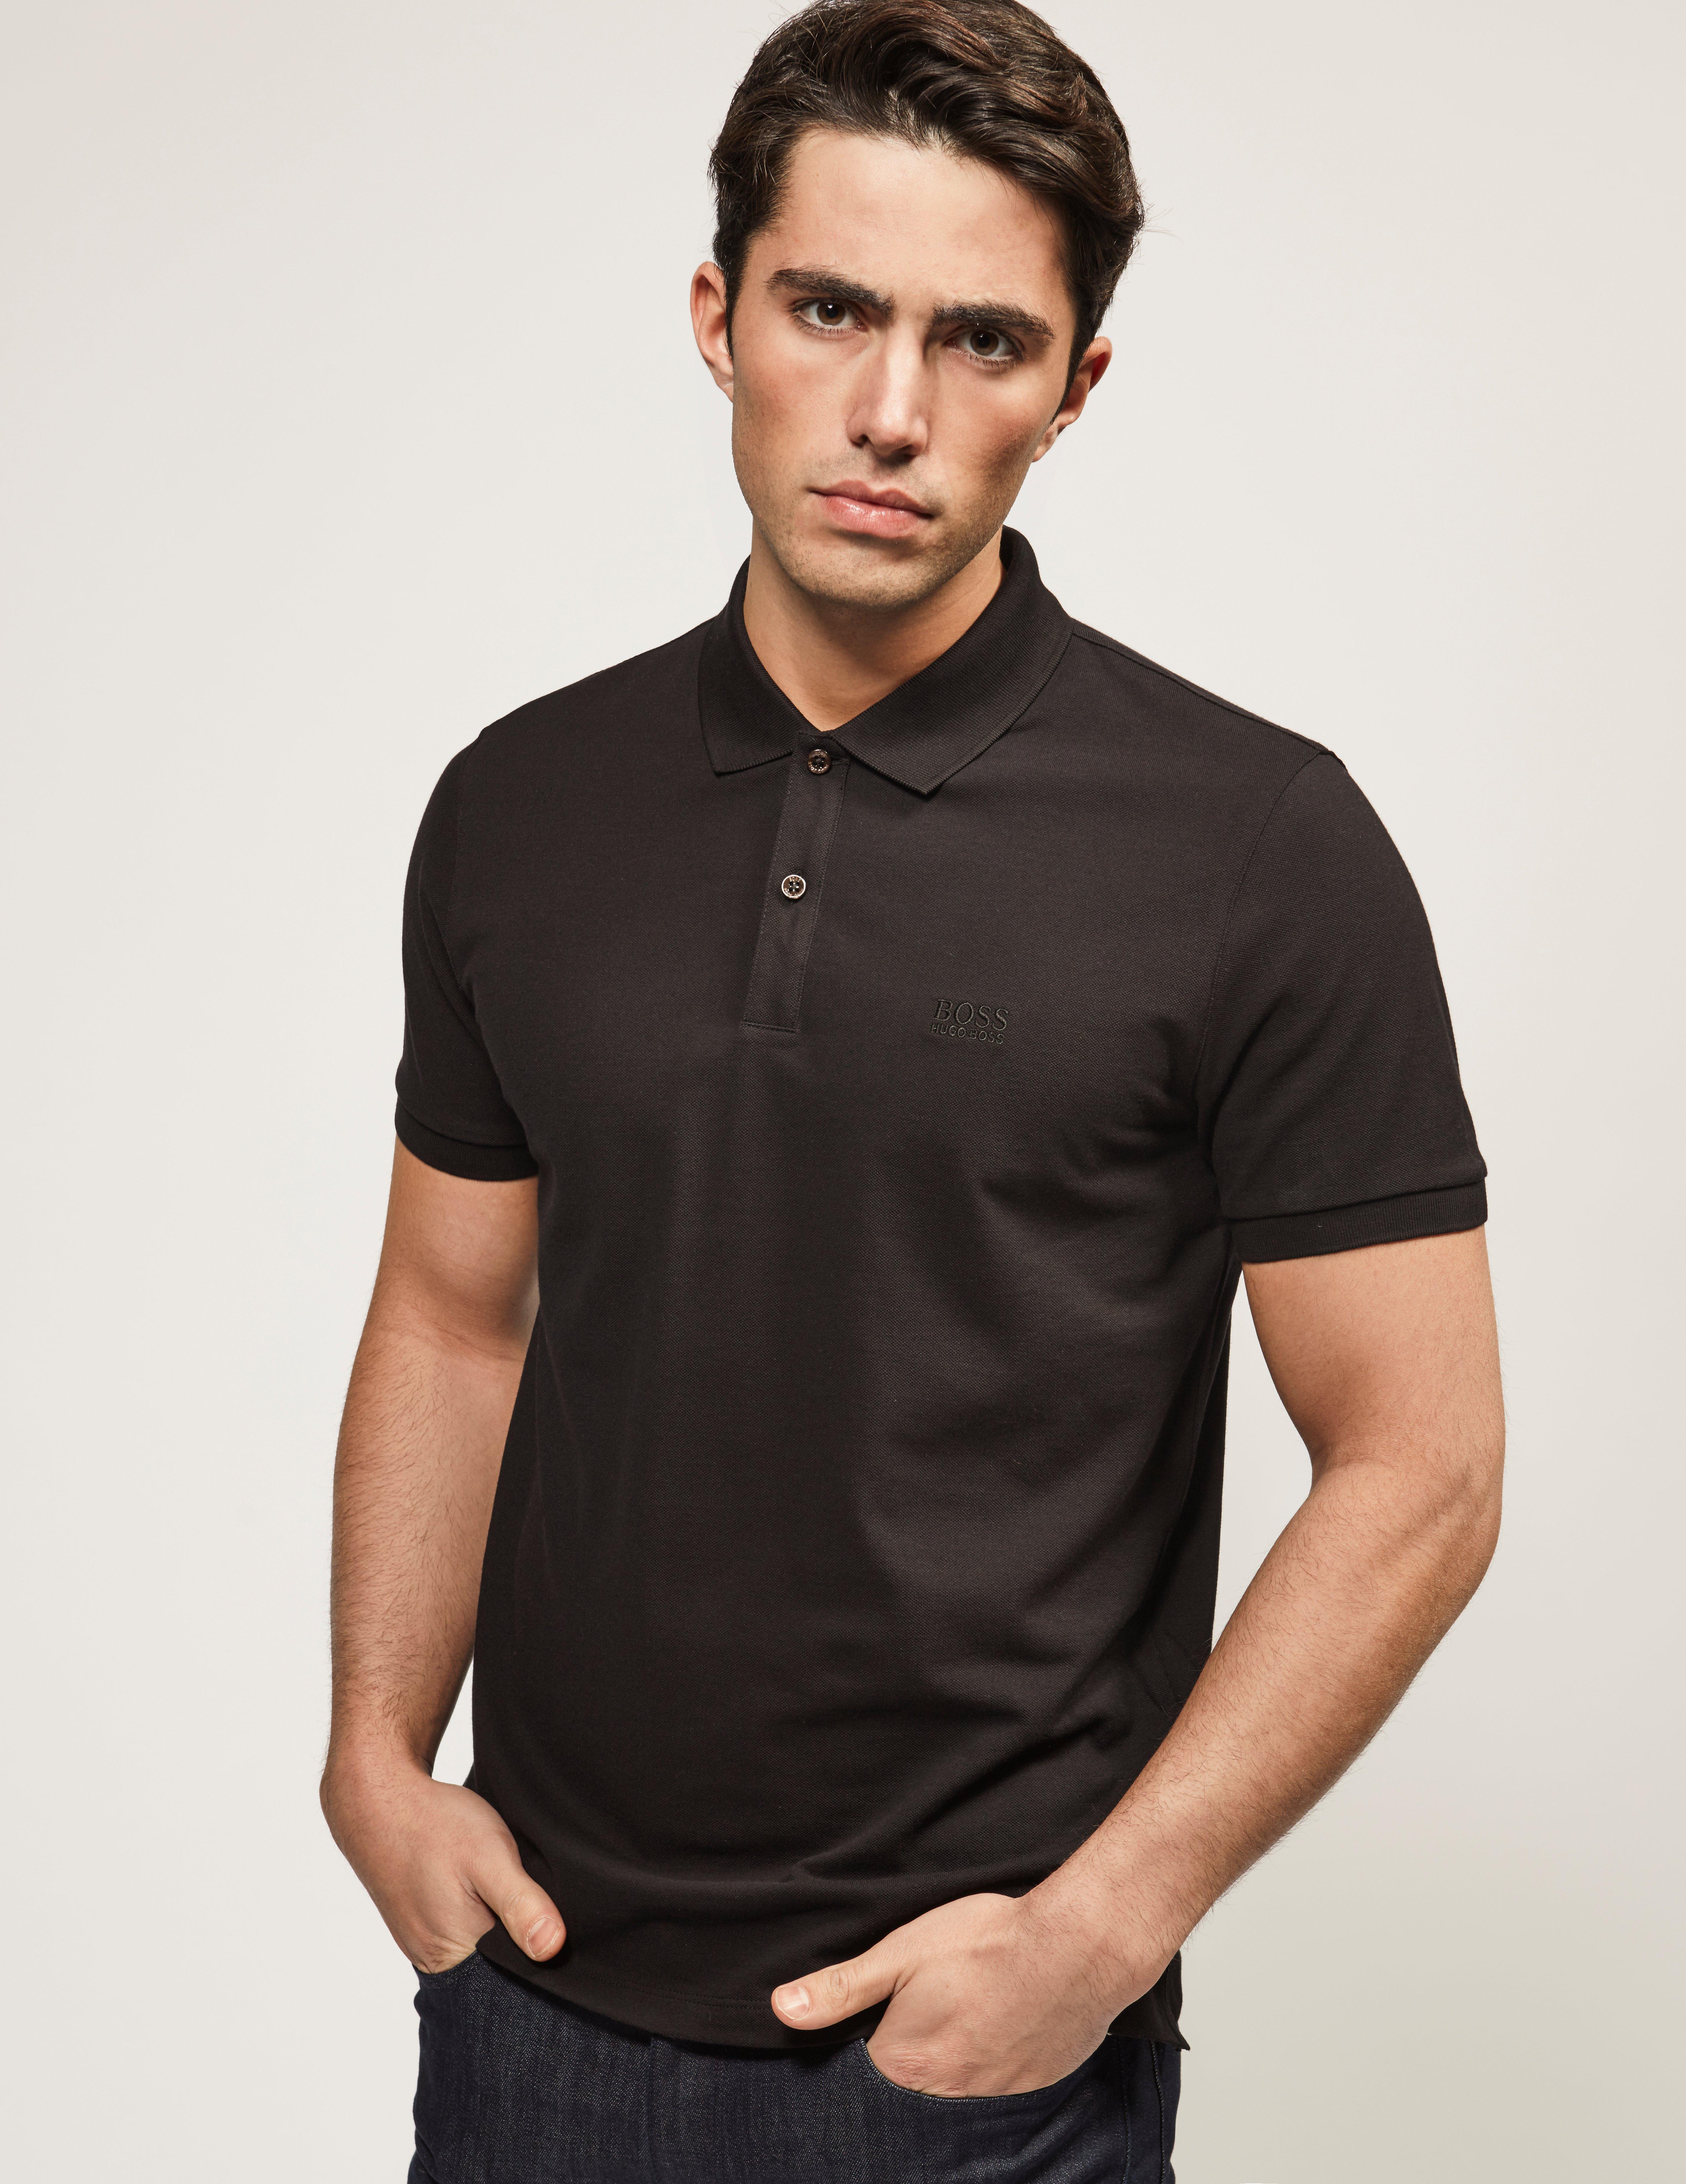 BOSS Cotton Pallas Polo Shirt in Black for Men - Lyst